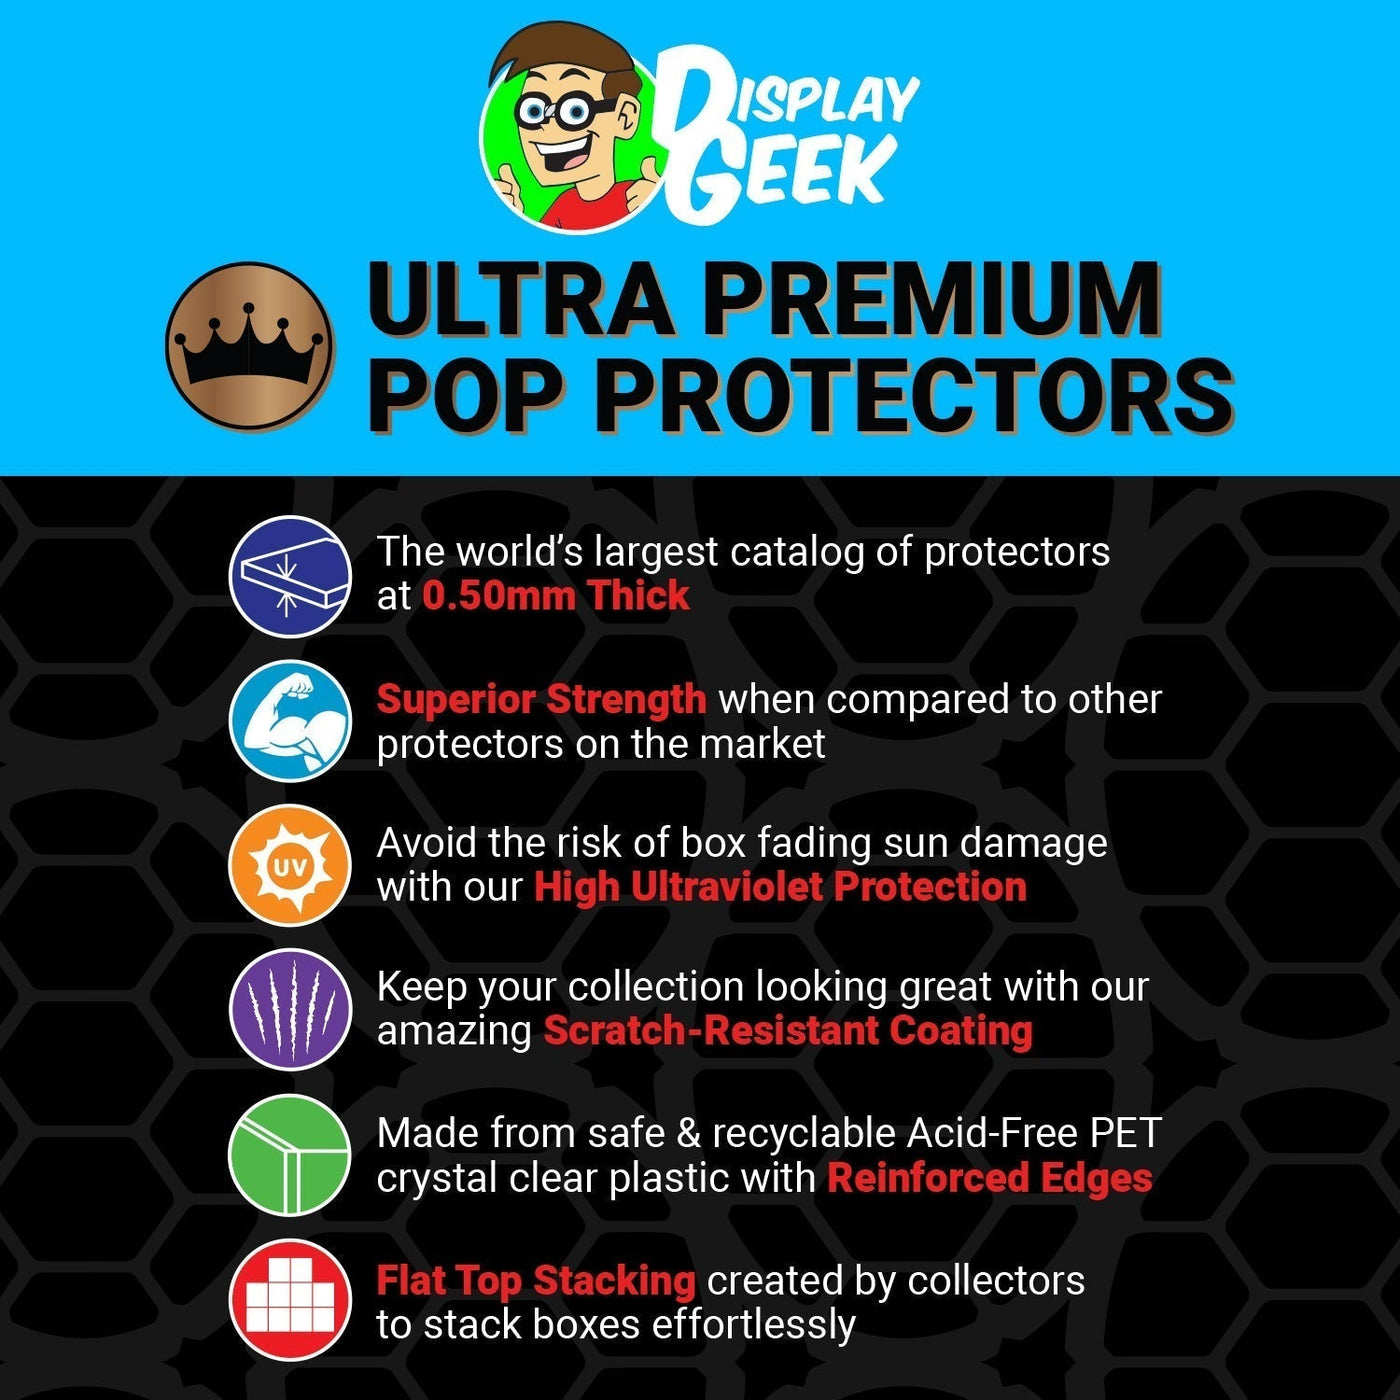 Pop Protector for 6 inch Kurama Mode Kurama Glow #97 Super Funko Pop on The Protector Guide App by Display Geek